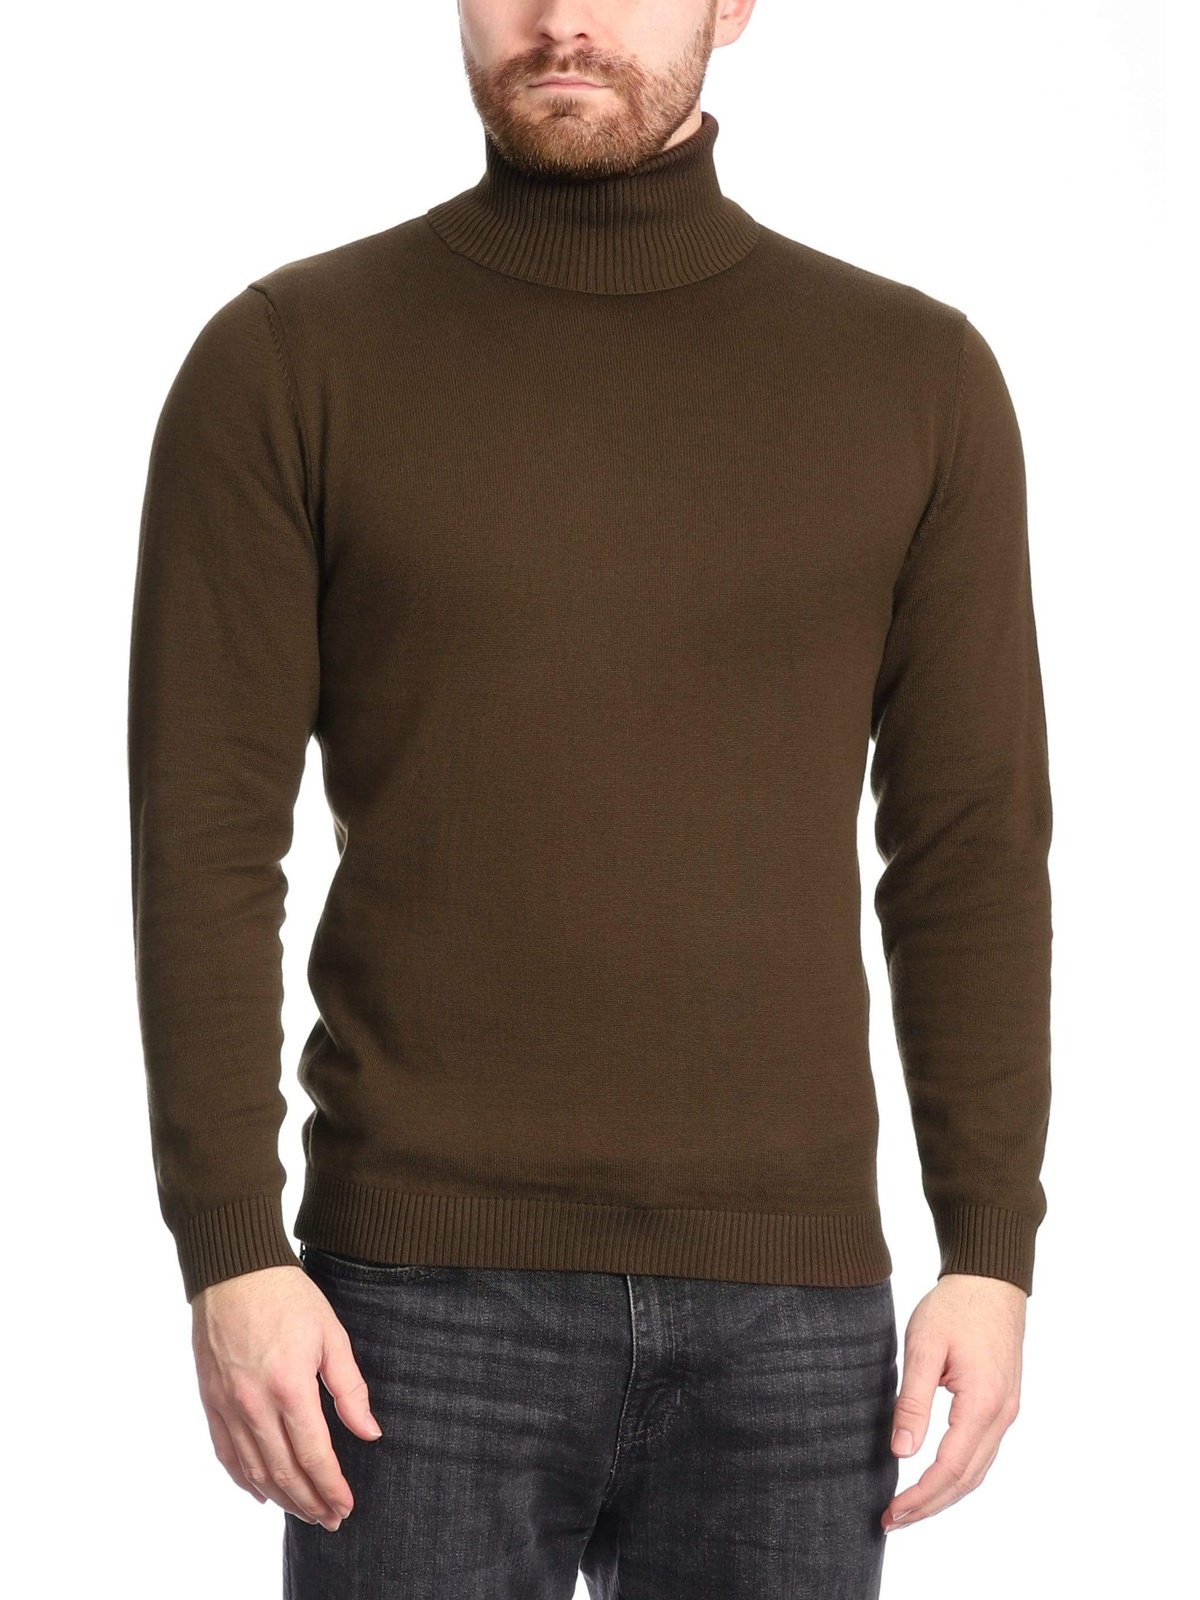 Arthur Black Default Category Migrated Brown / 6XL Arthur Black Men's Solid Brown Pullover Cotton Blend Turtleneck Sweater Shirt